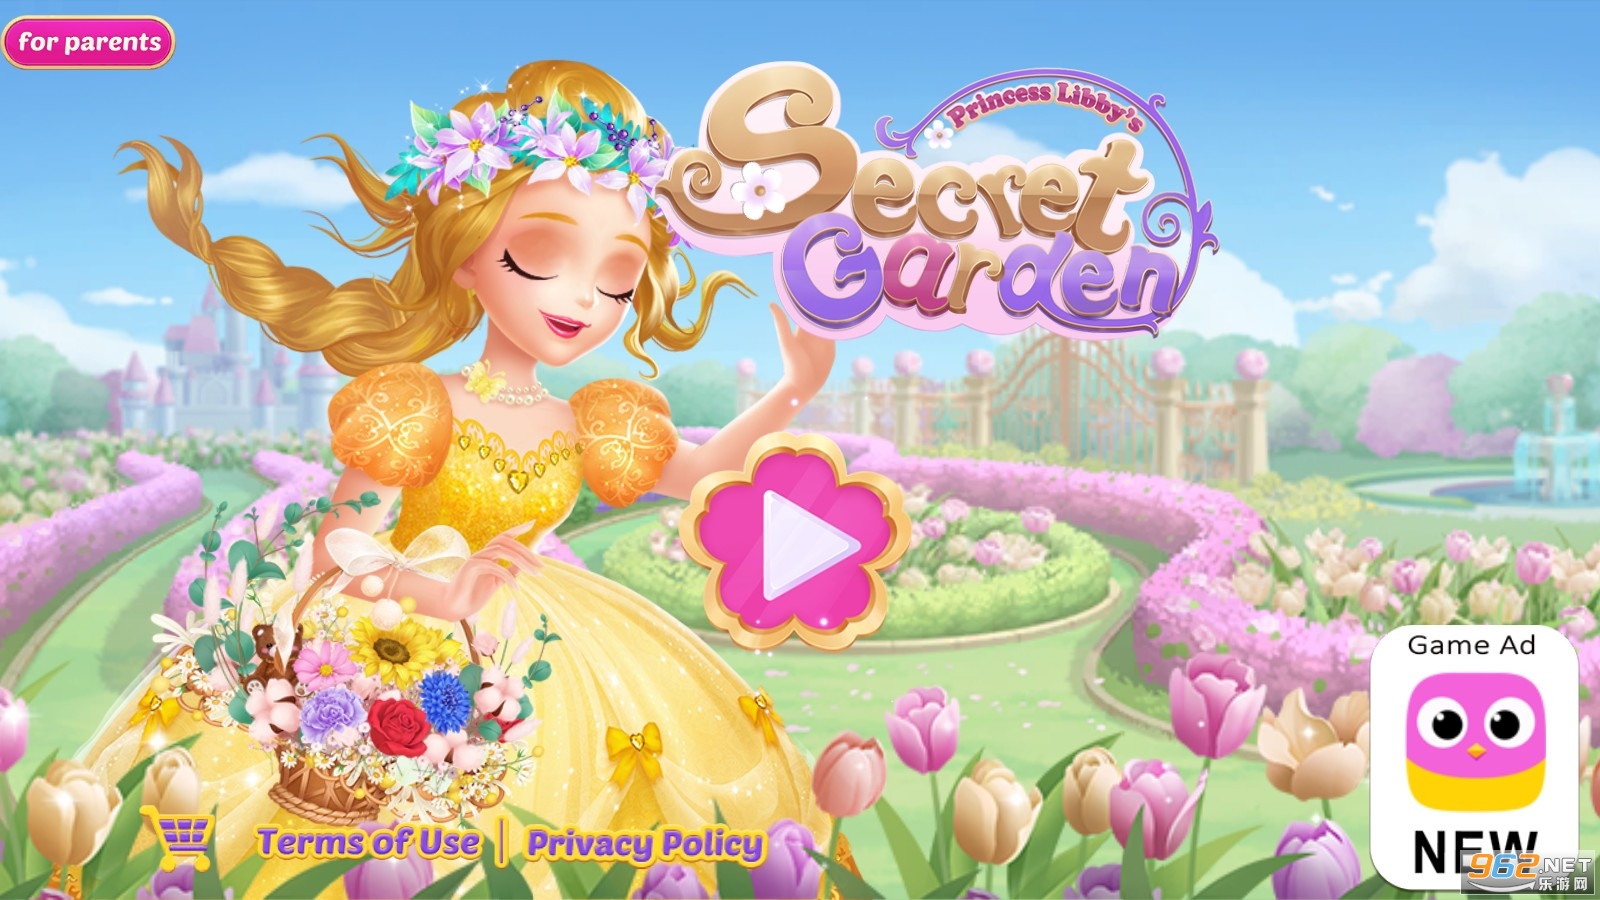 Princess Libby Secret Garden